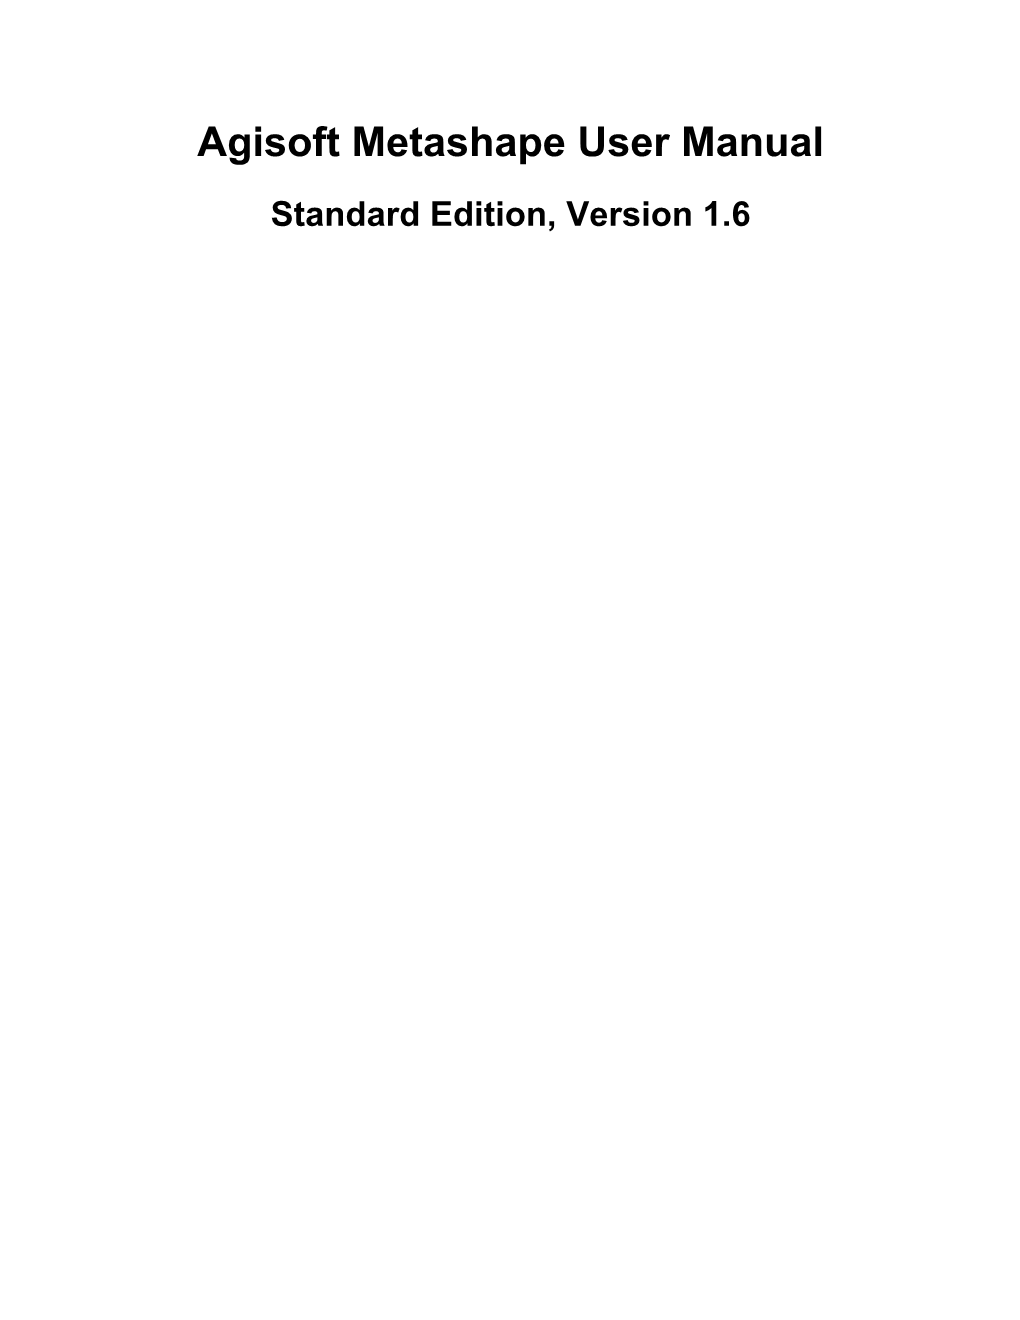 Agisoft Metashape User Manual Standard Edition, Version 1.6 Agisoft Metashape User Manual: Standard Edition, Version 1.6